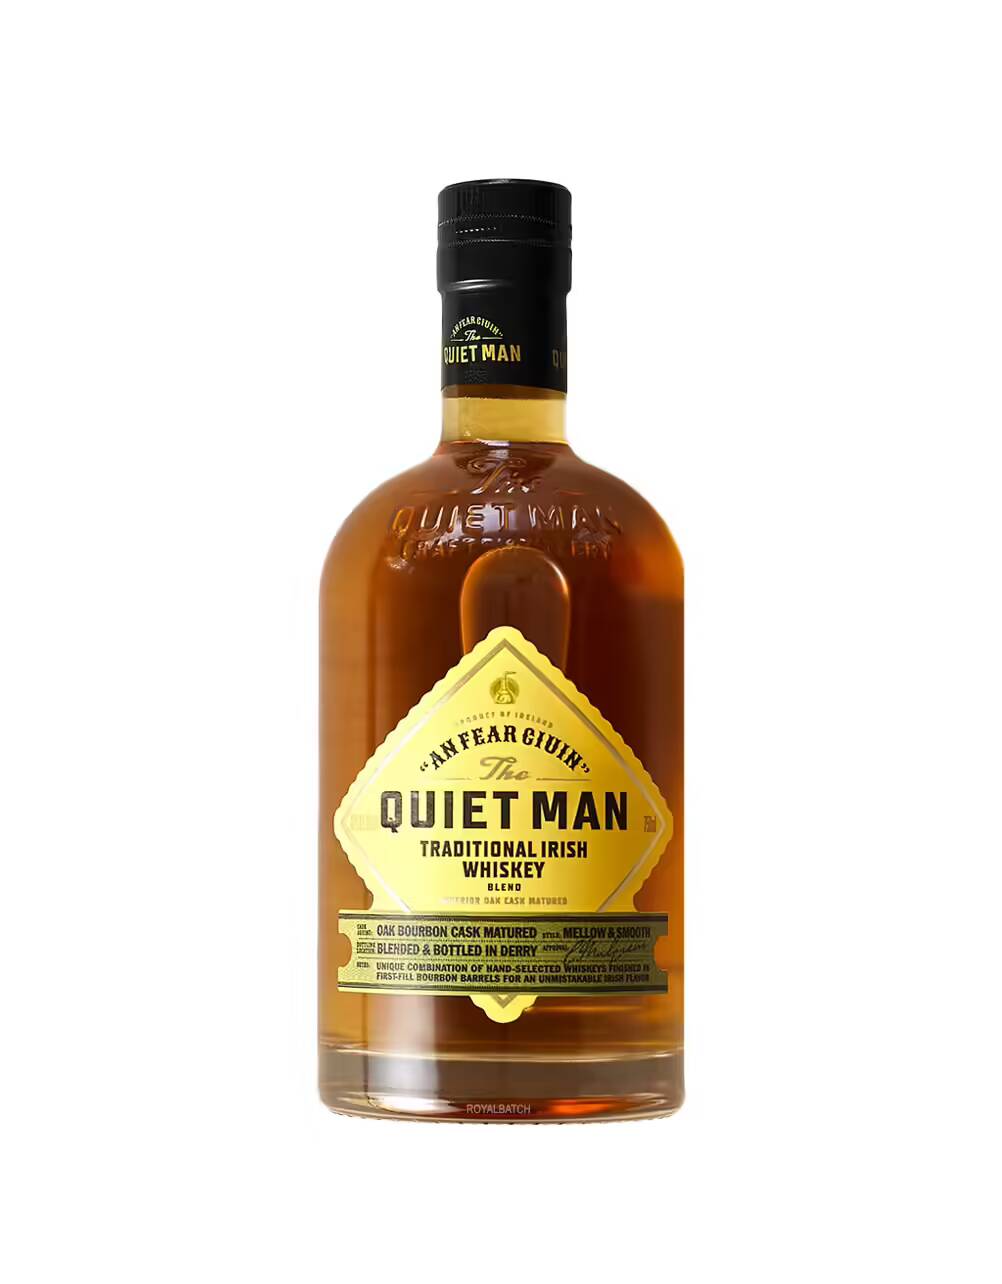 The Quiet Man Traditional Irish Whisky